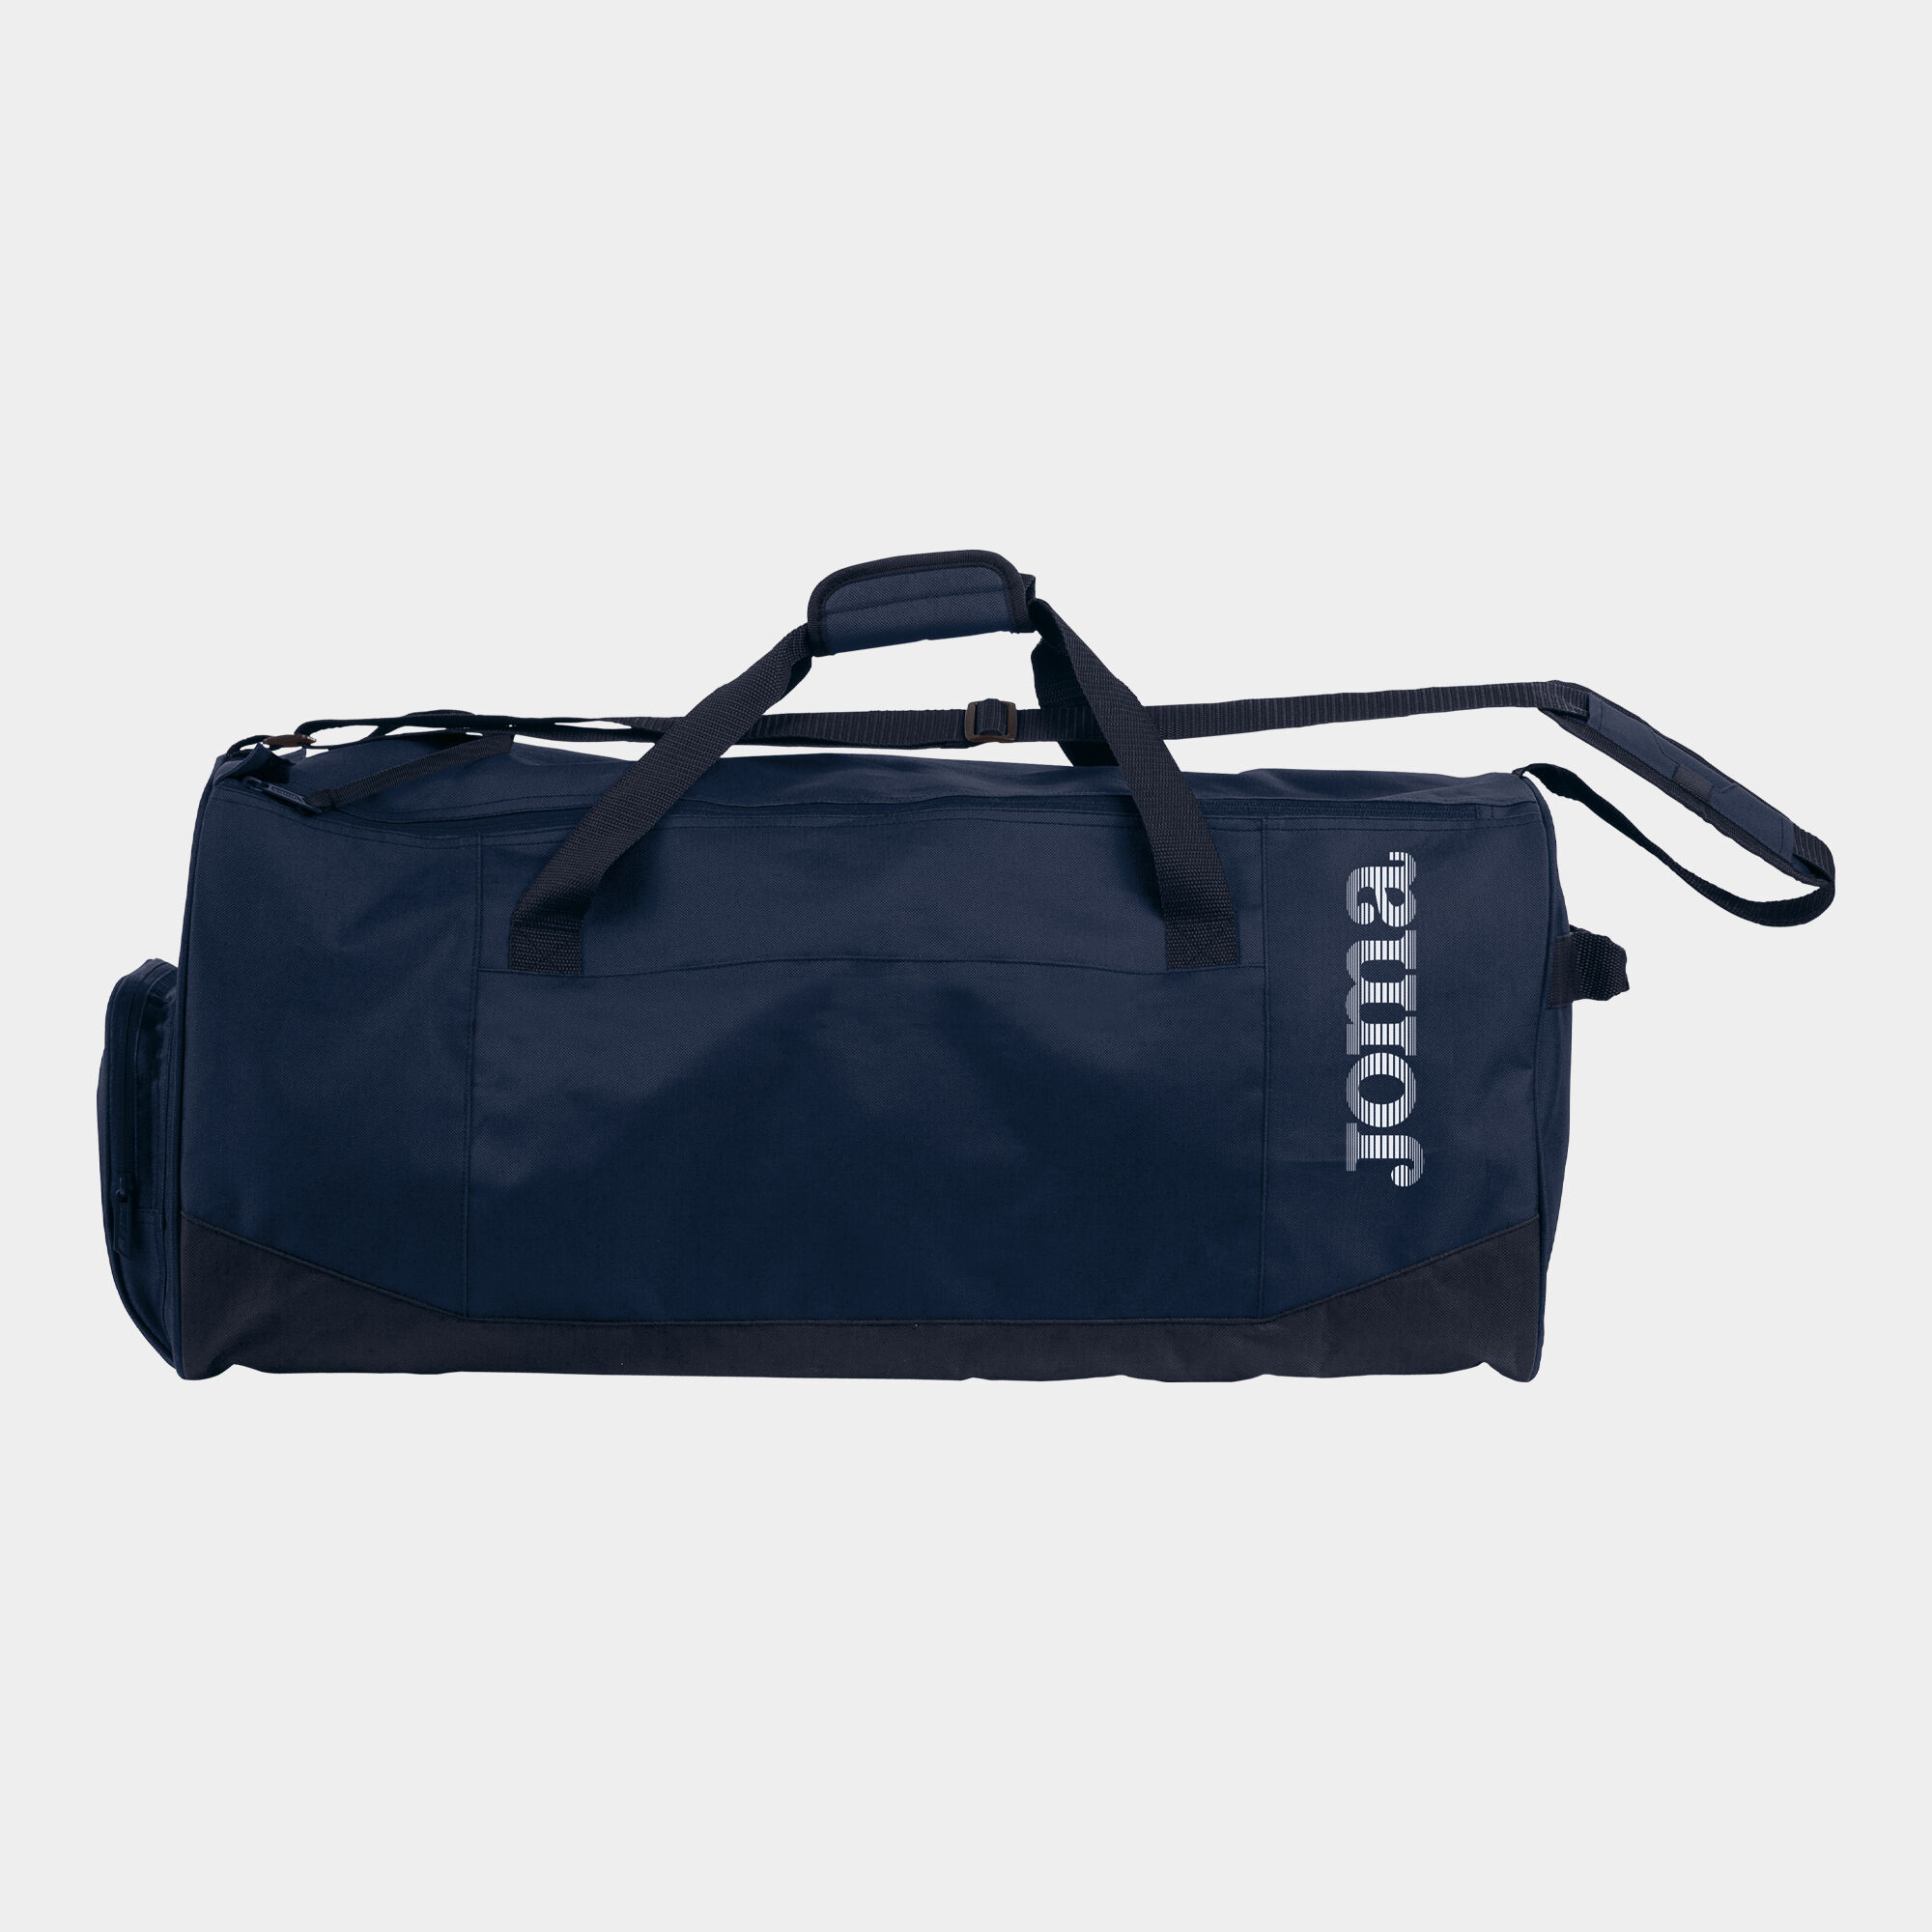 Sports bag Medium III navy blue